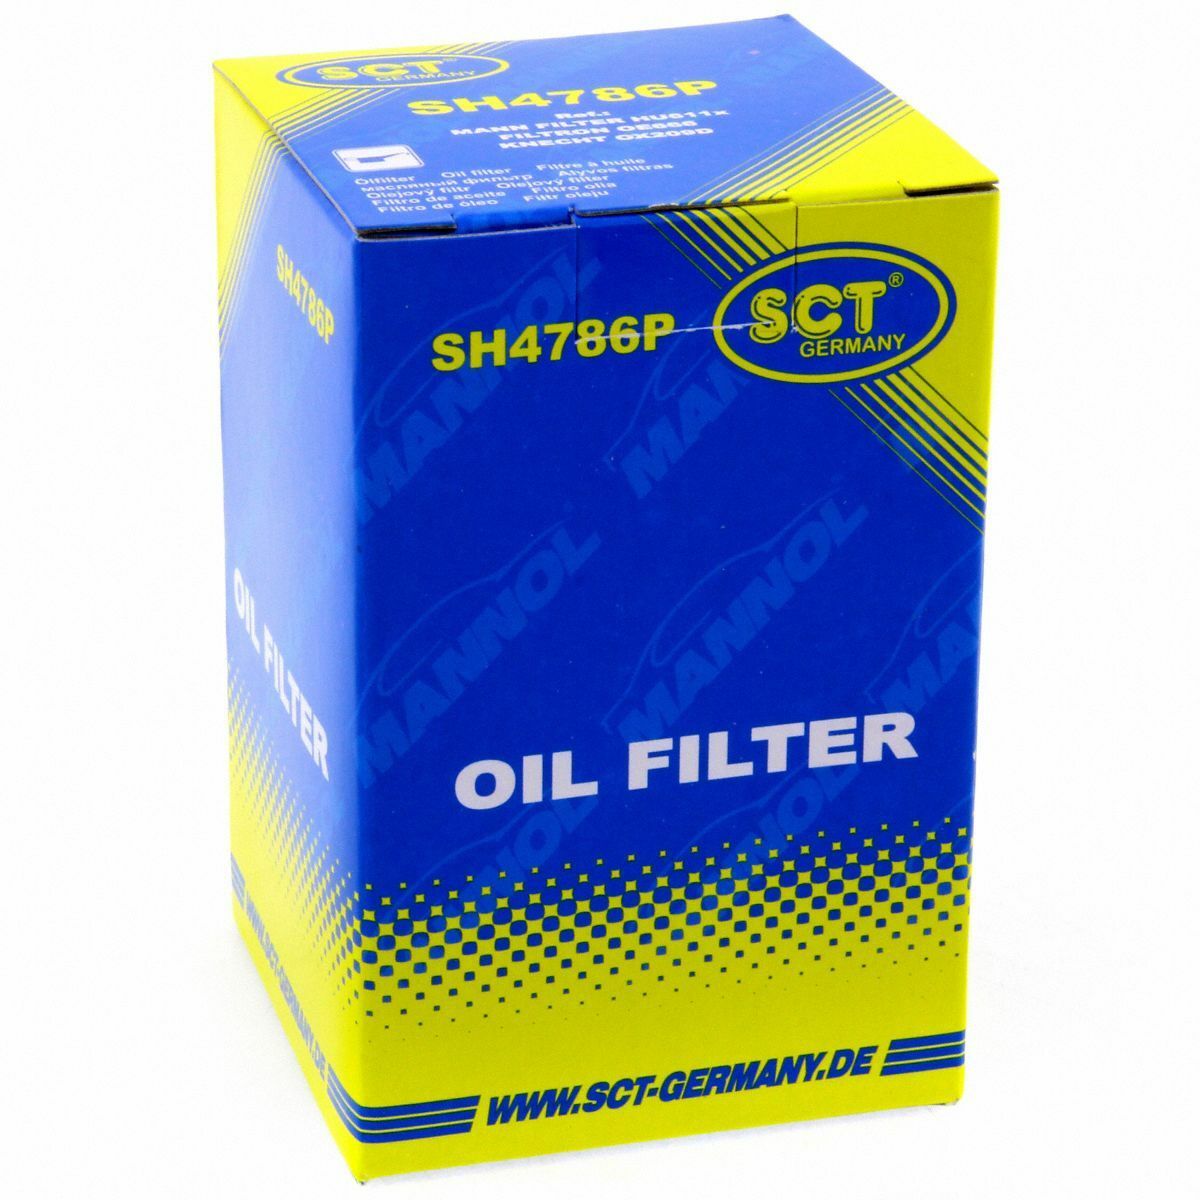 SCT Ölfilter SH 4786 P Filter Motorfilter Servicefilter Patronenfilter Renault